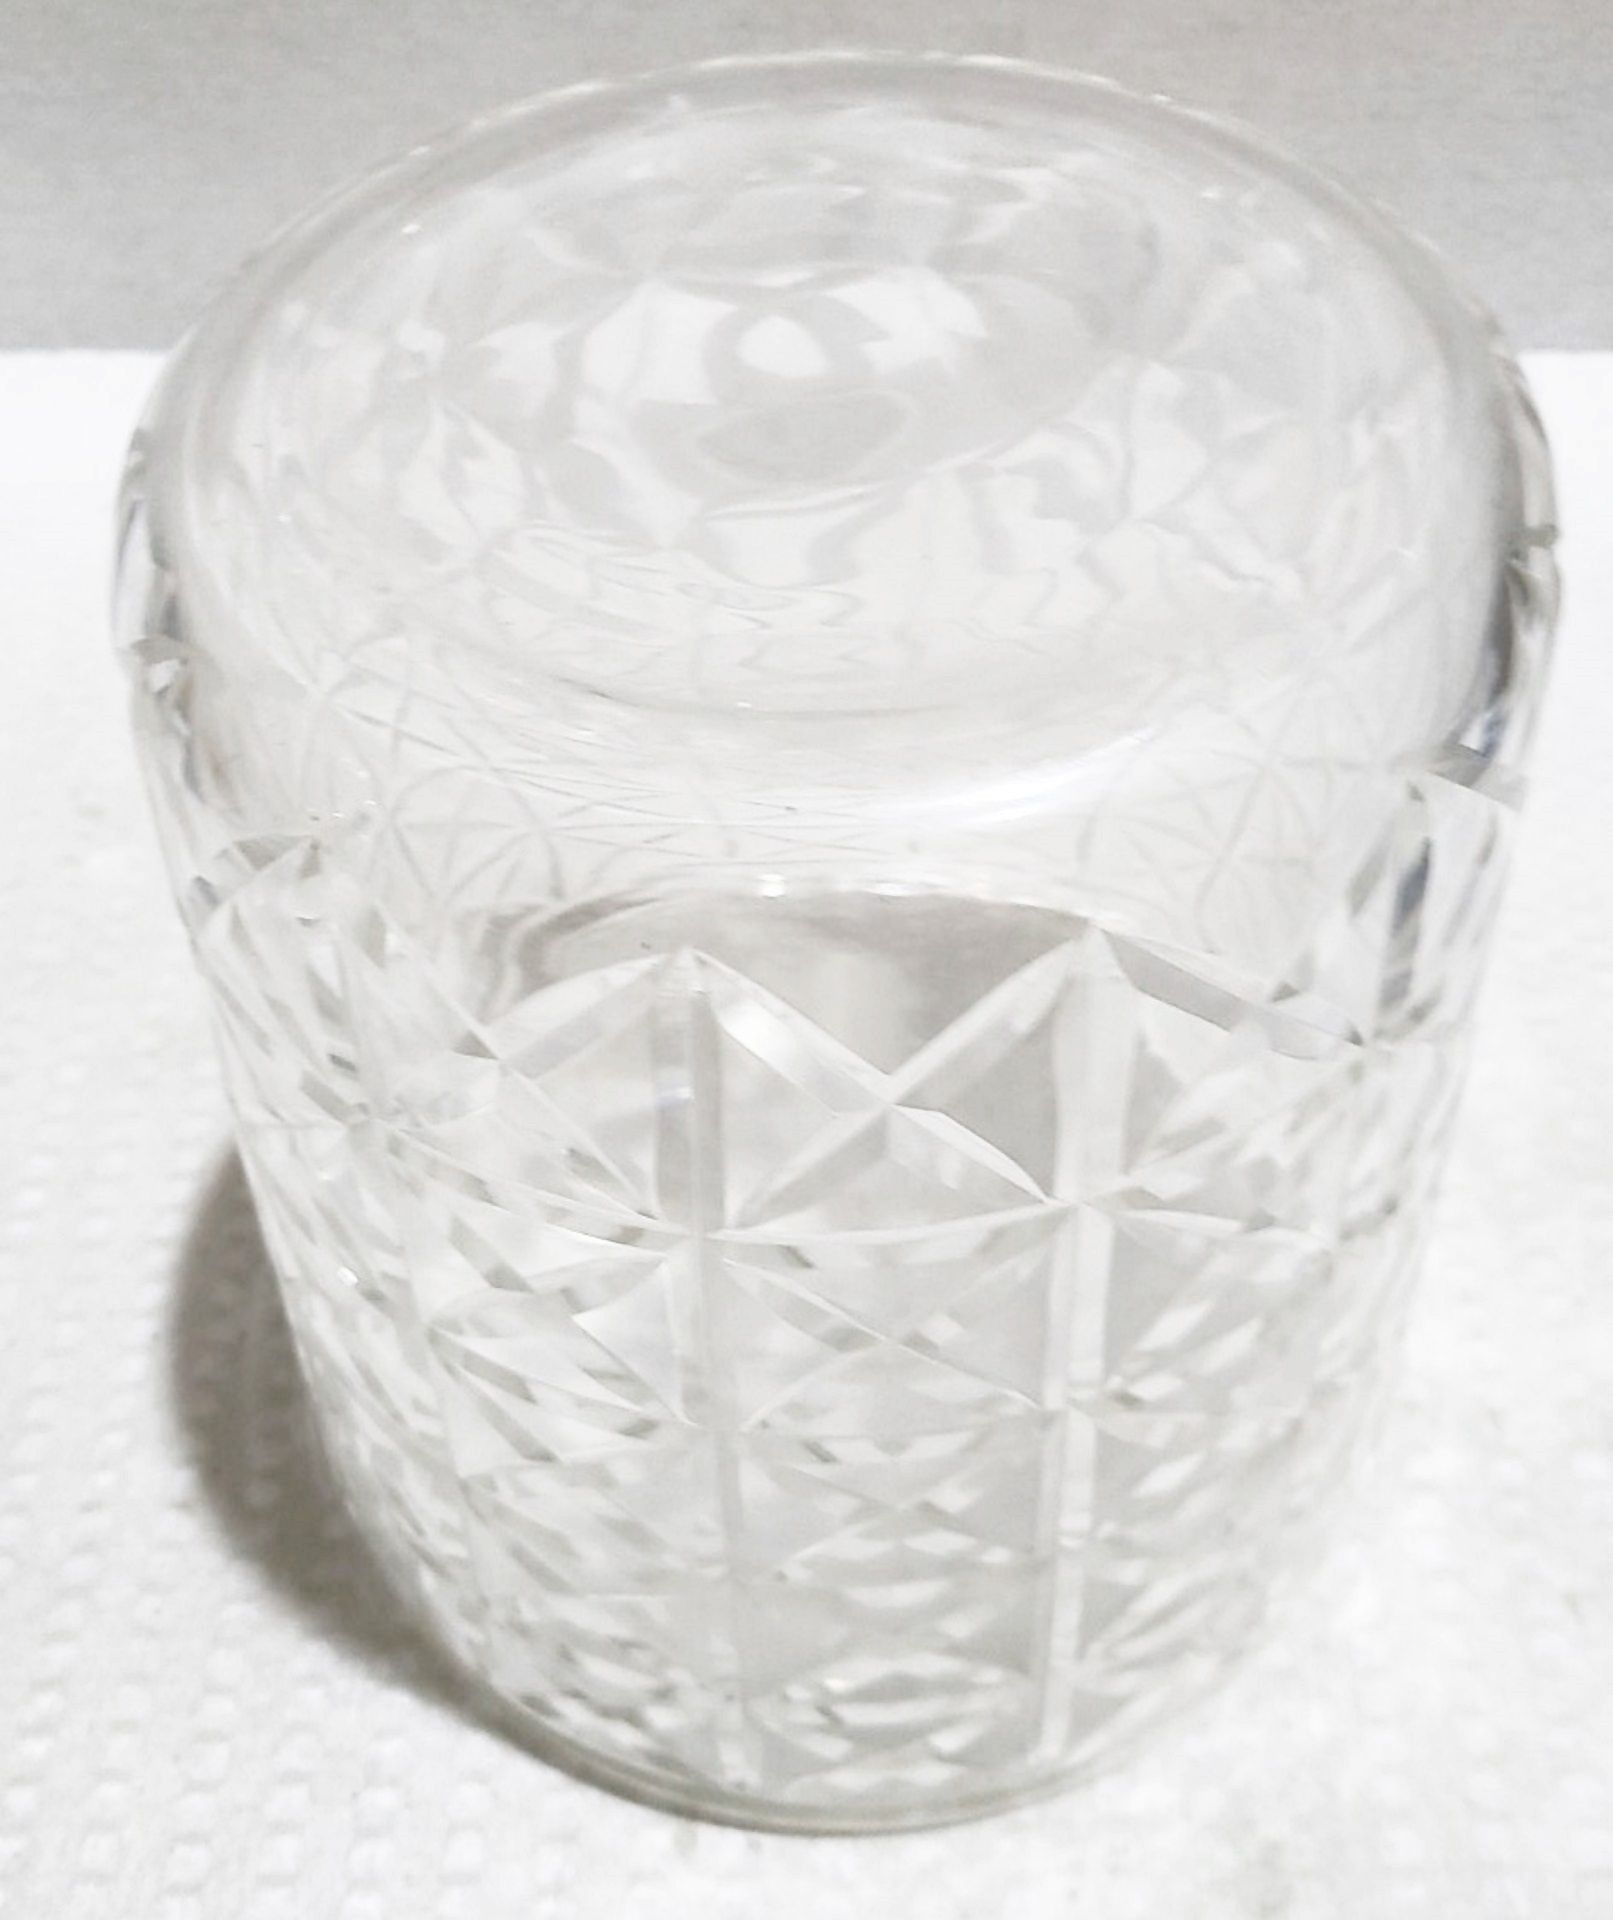 1 x EICHHOLTZ 'Chablis' Luxury Hand-blown Clear Glass Wine Cooler - Original Price £468.00 - Image 2 of 3